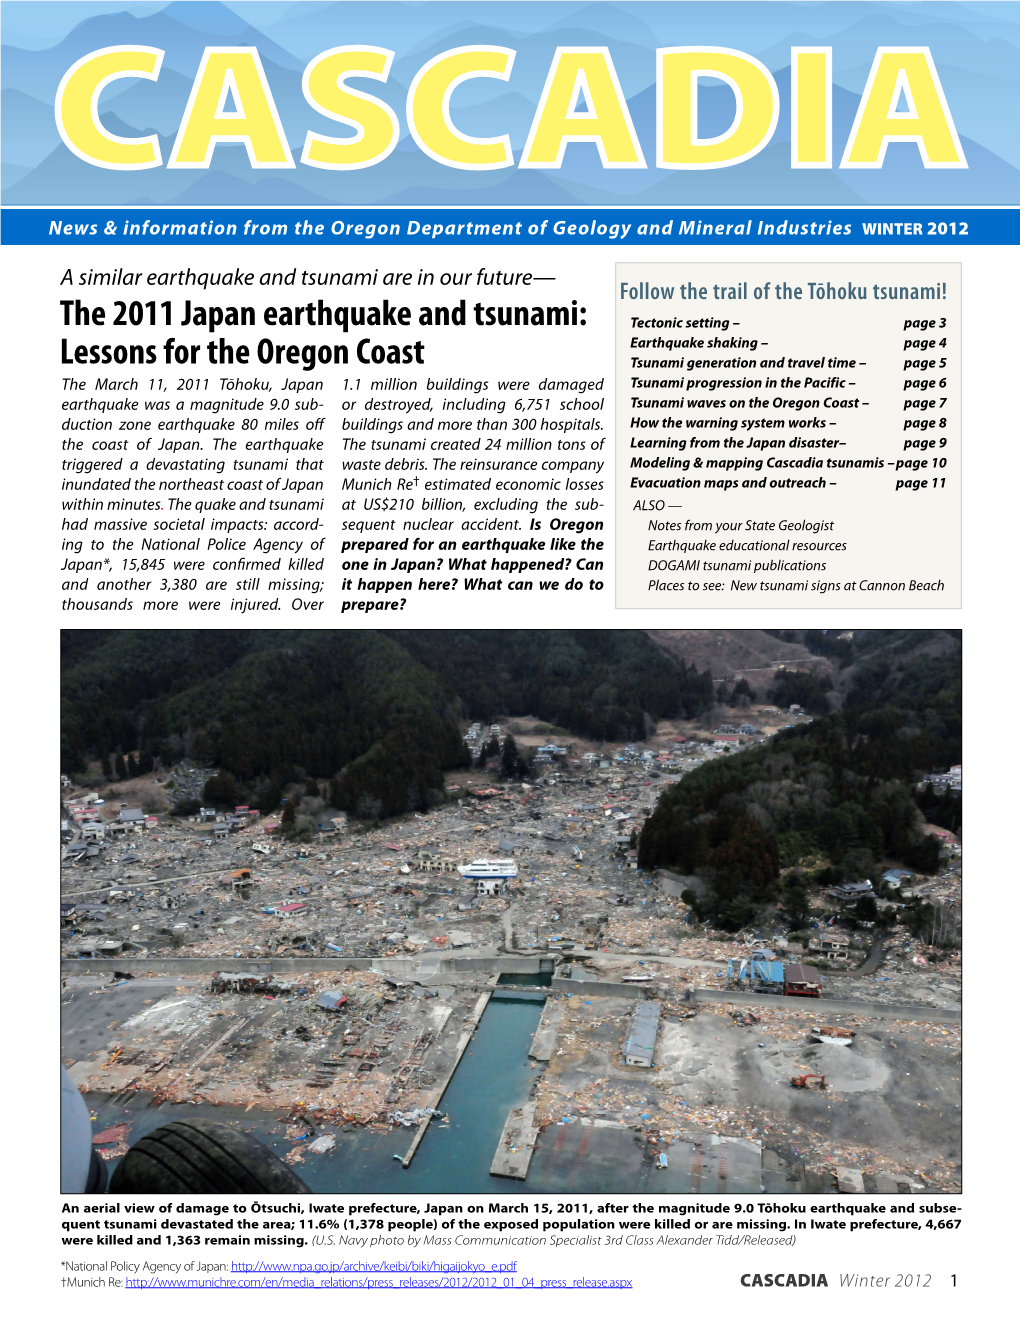 Cascadia Winter 2012: the 2011 Japan Earthquake and Tsunami